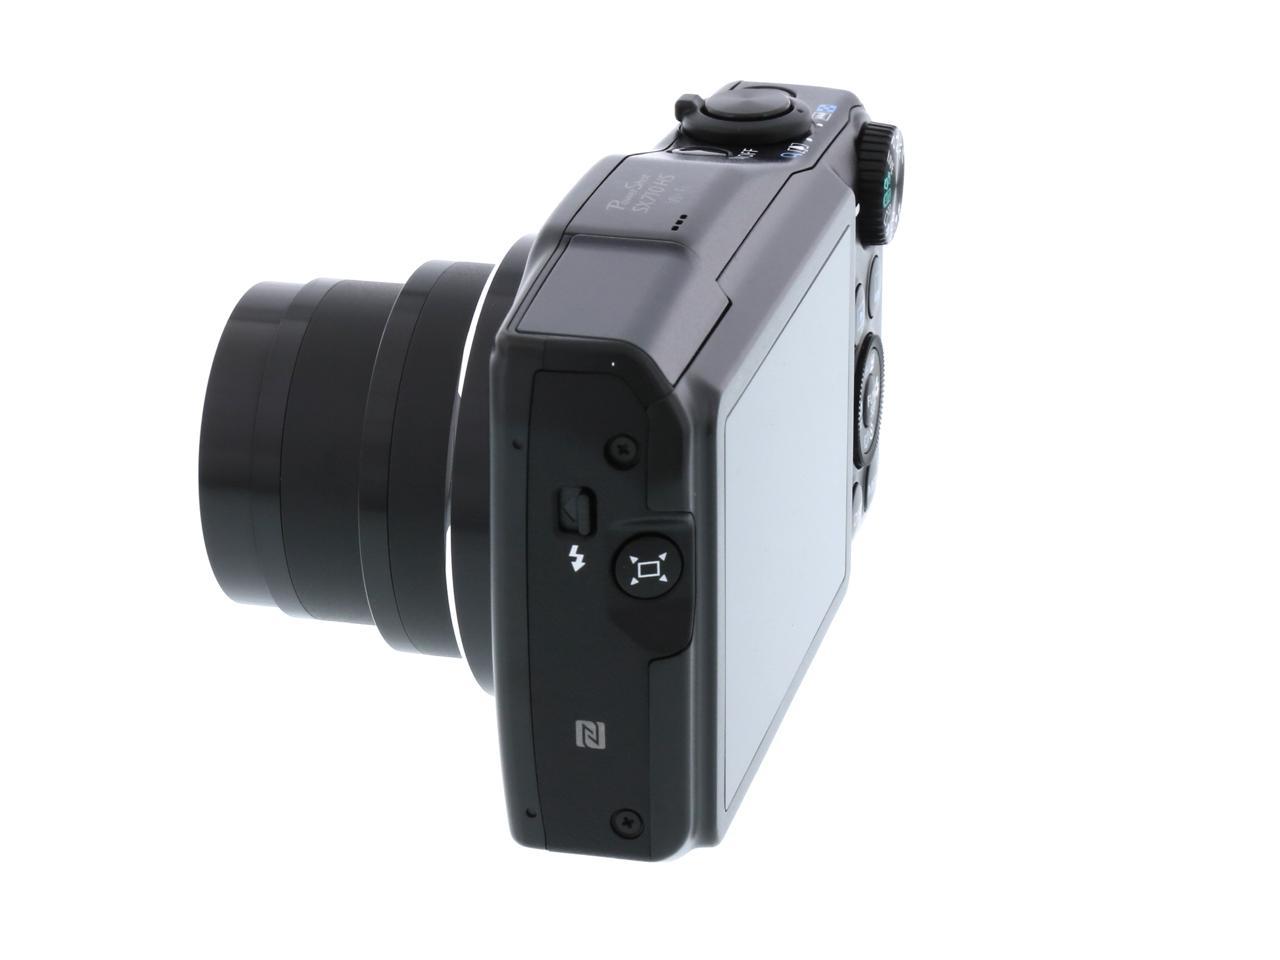 Canon PowerShot SX710 HS Black 20.3 MP 25mm Wide Angle High-End, Advanced Digital Camera HDTV